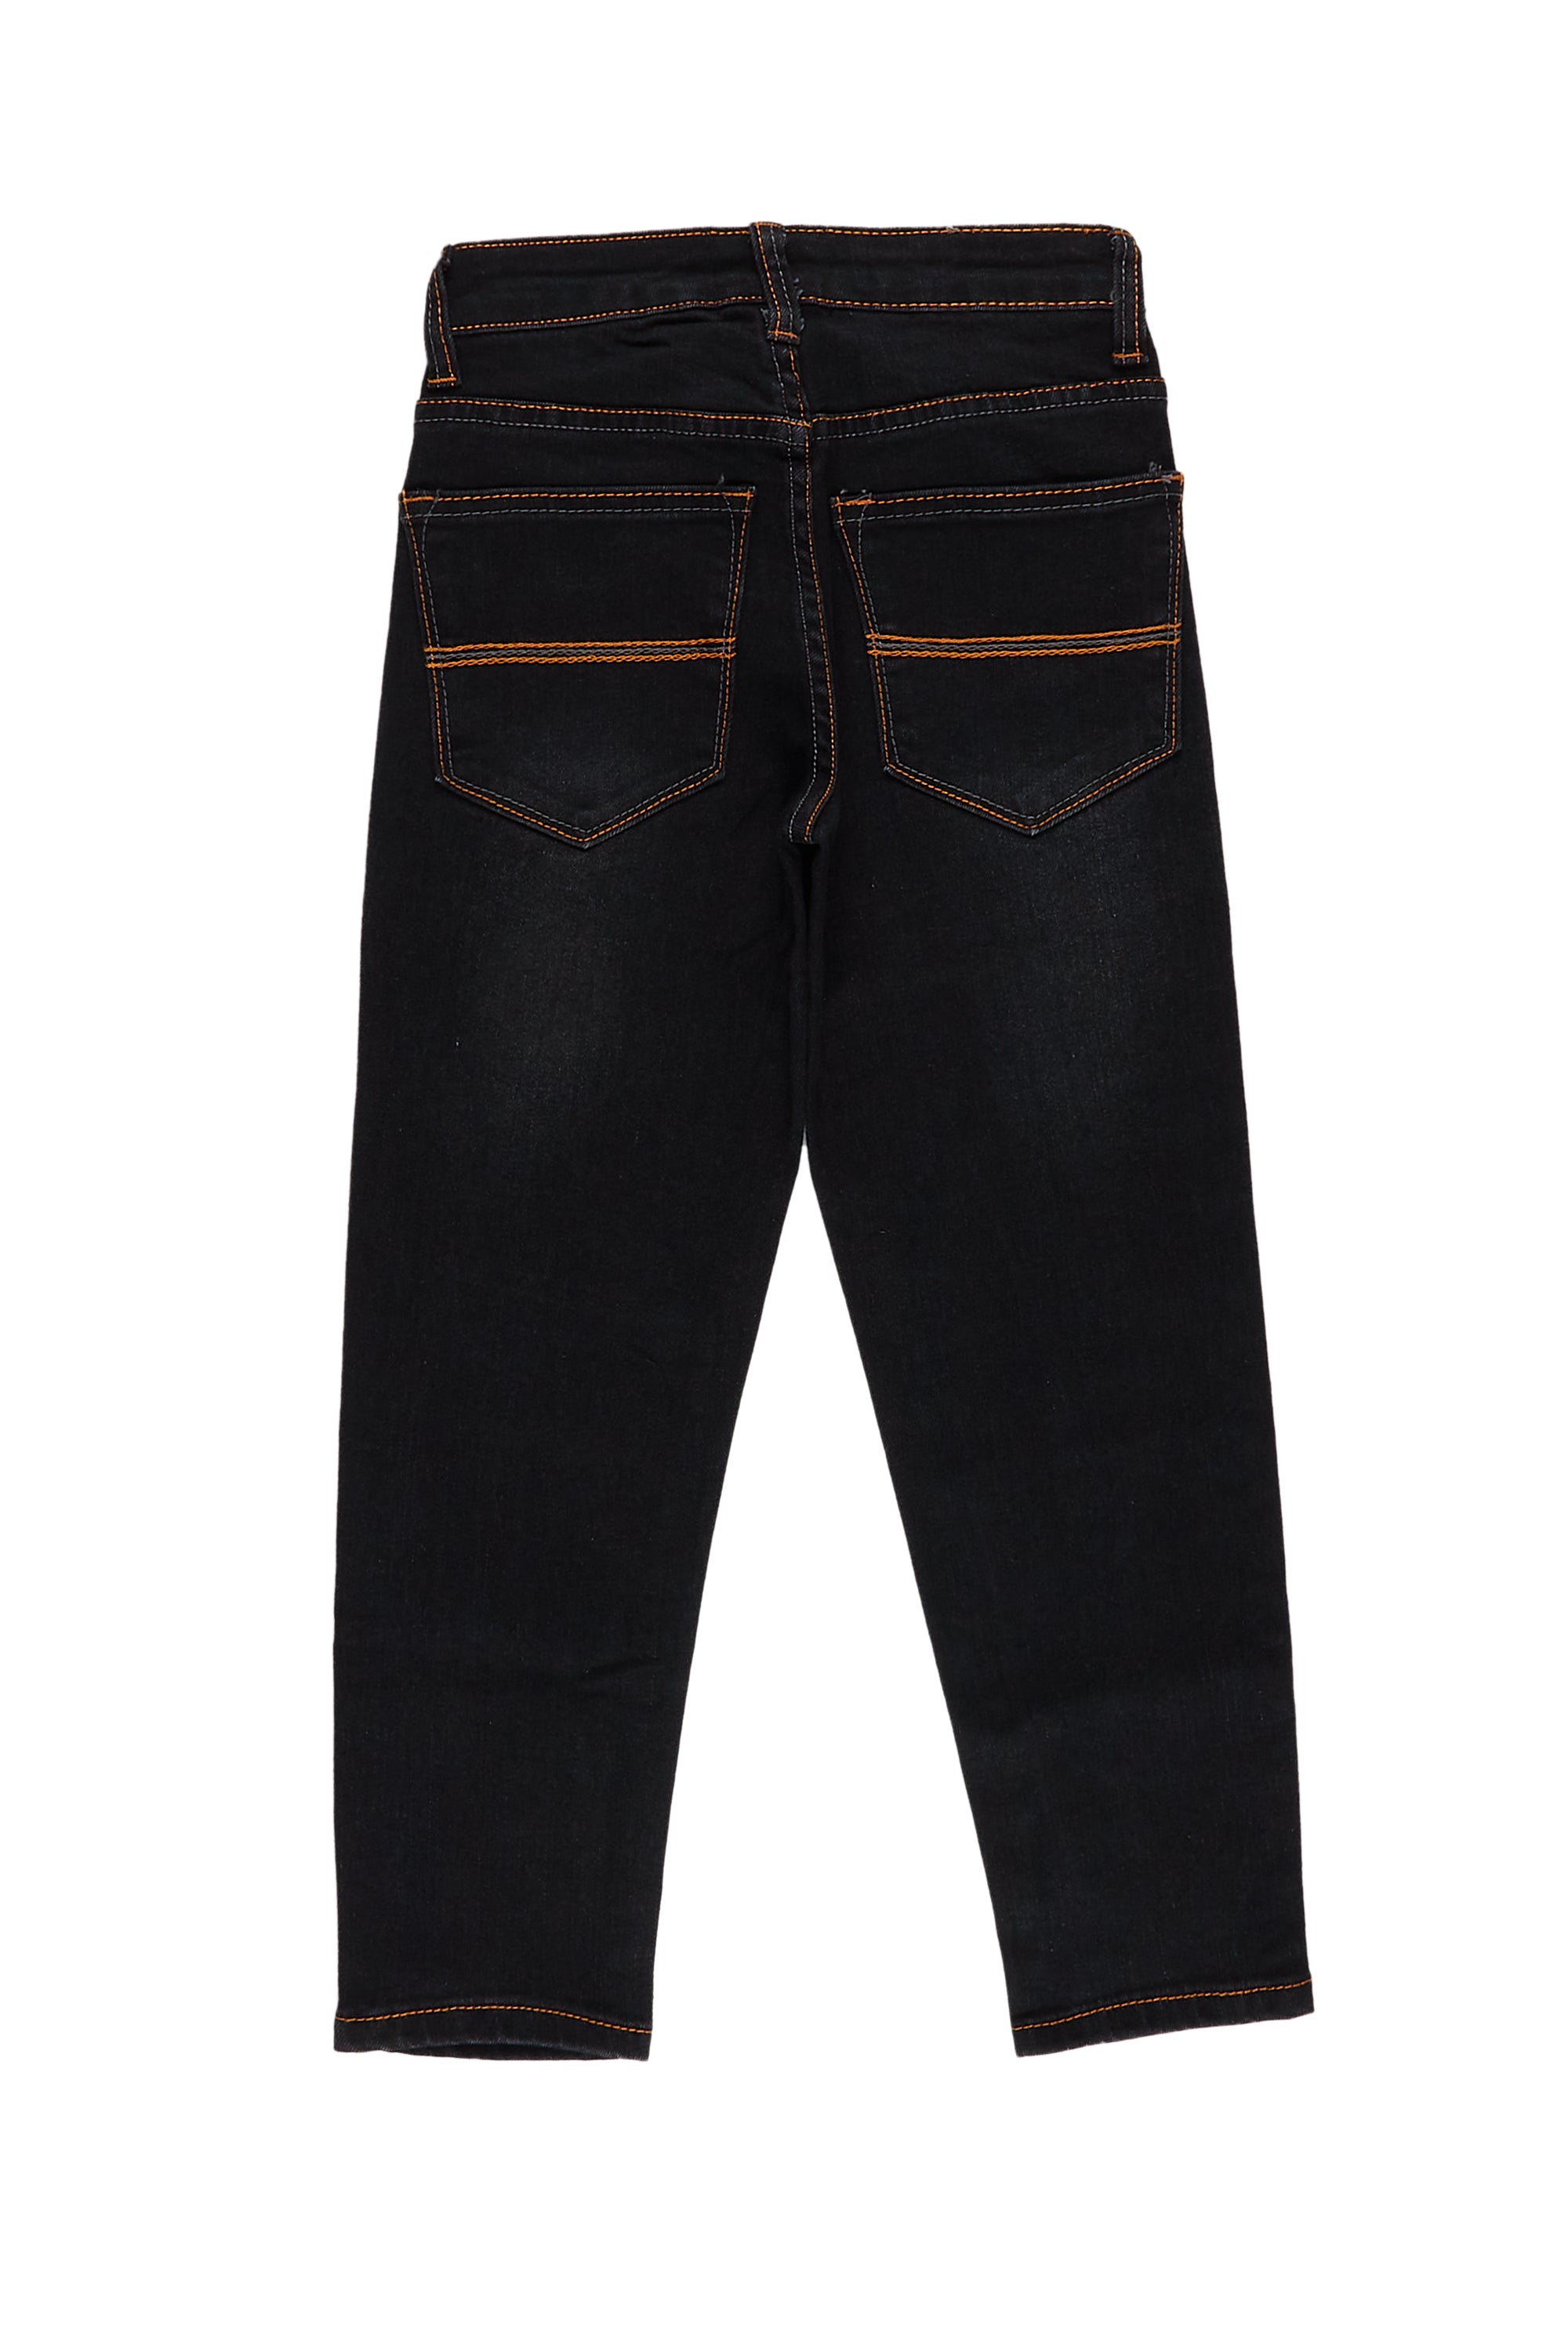 Boys Evander Black 5 Pocket Jean